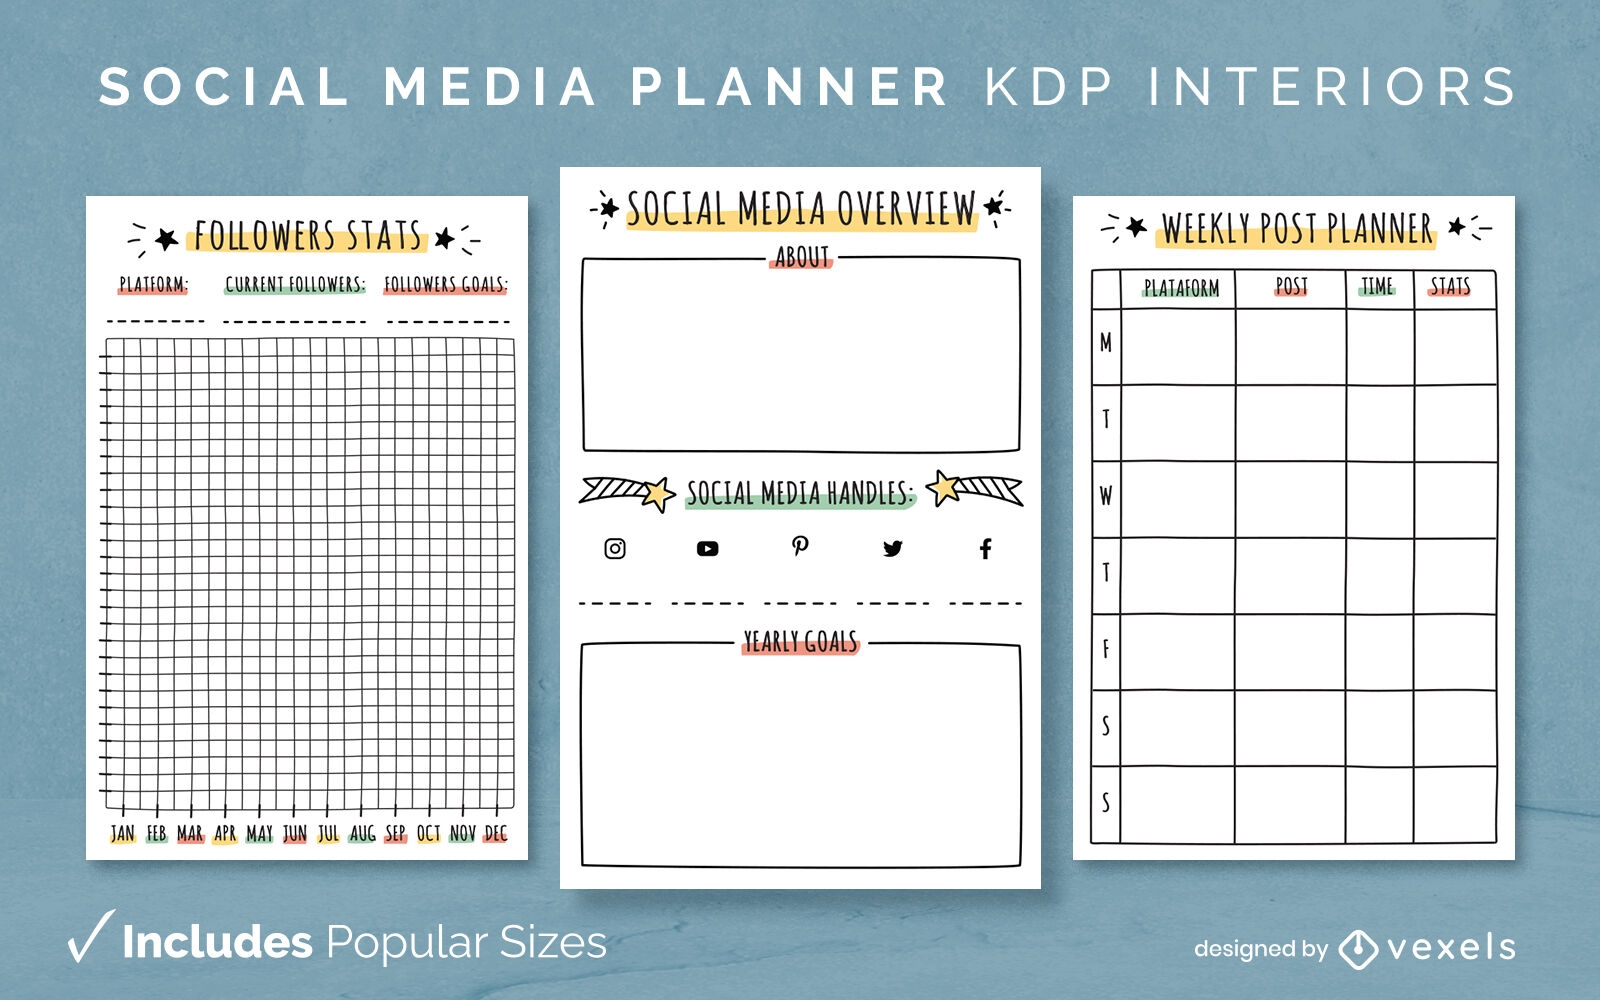 KDP de modelo de planejador de mídia social